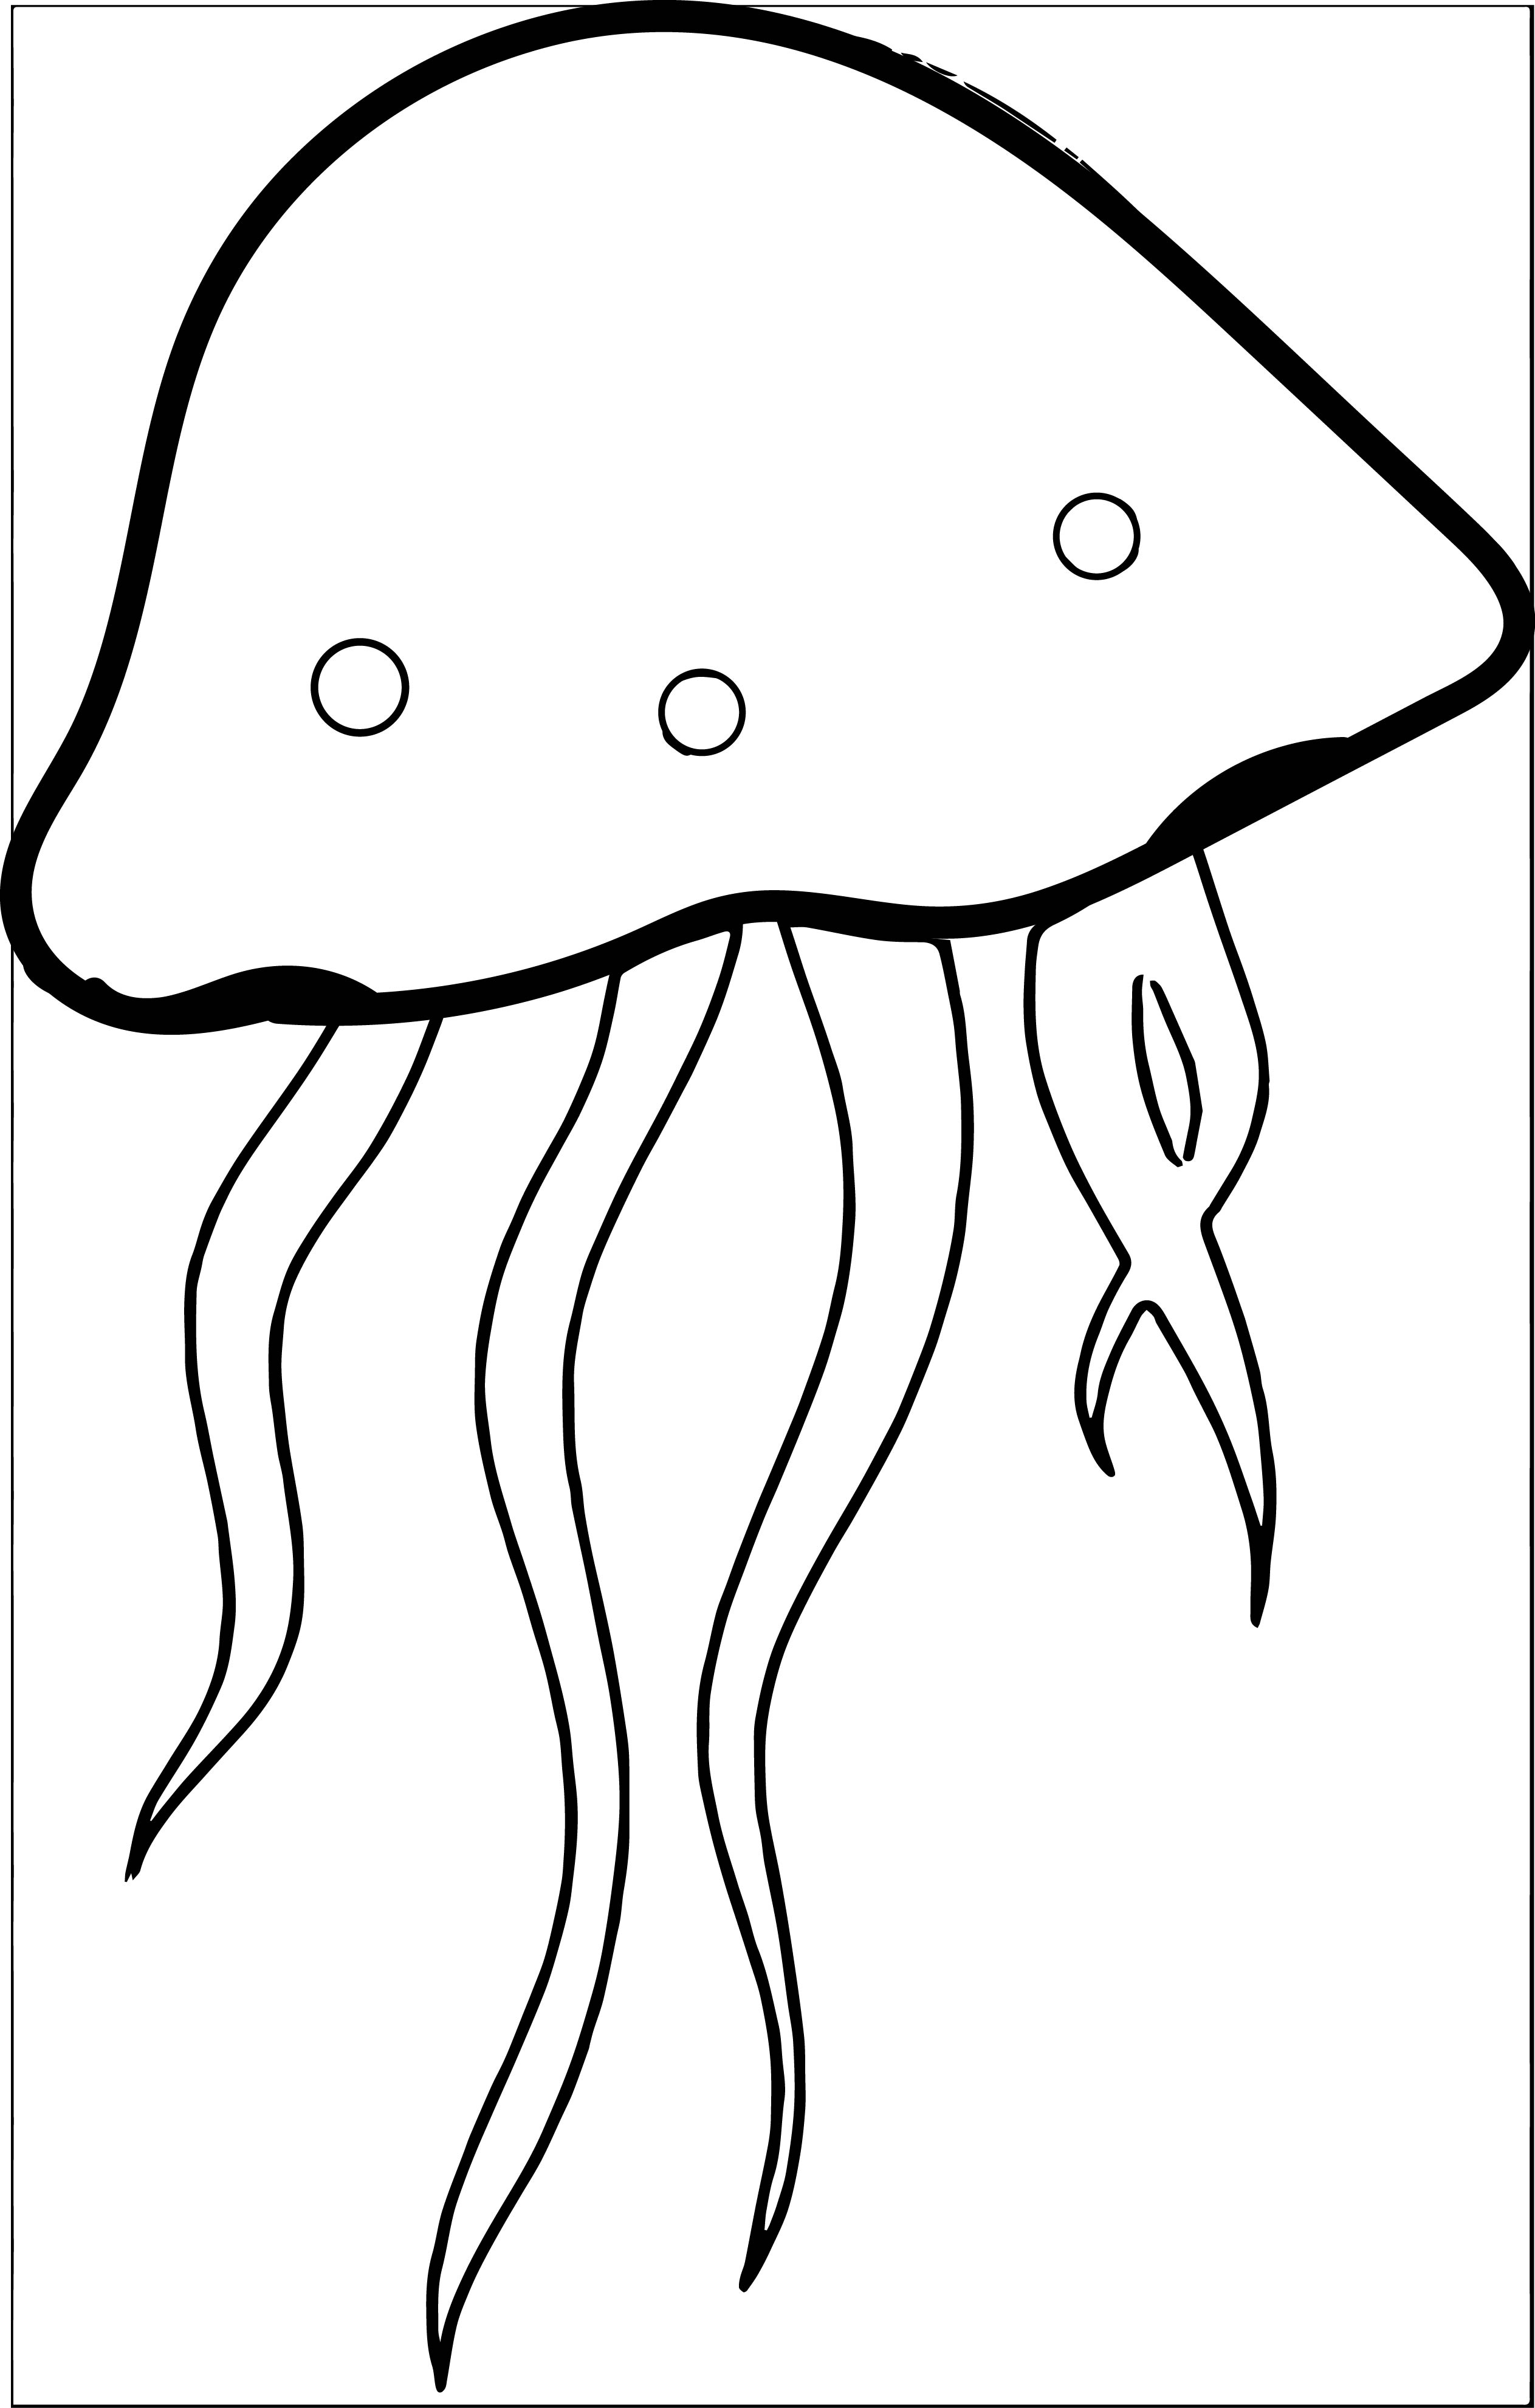 jellyfish clipart black and white - photo #9